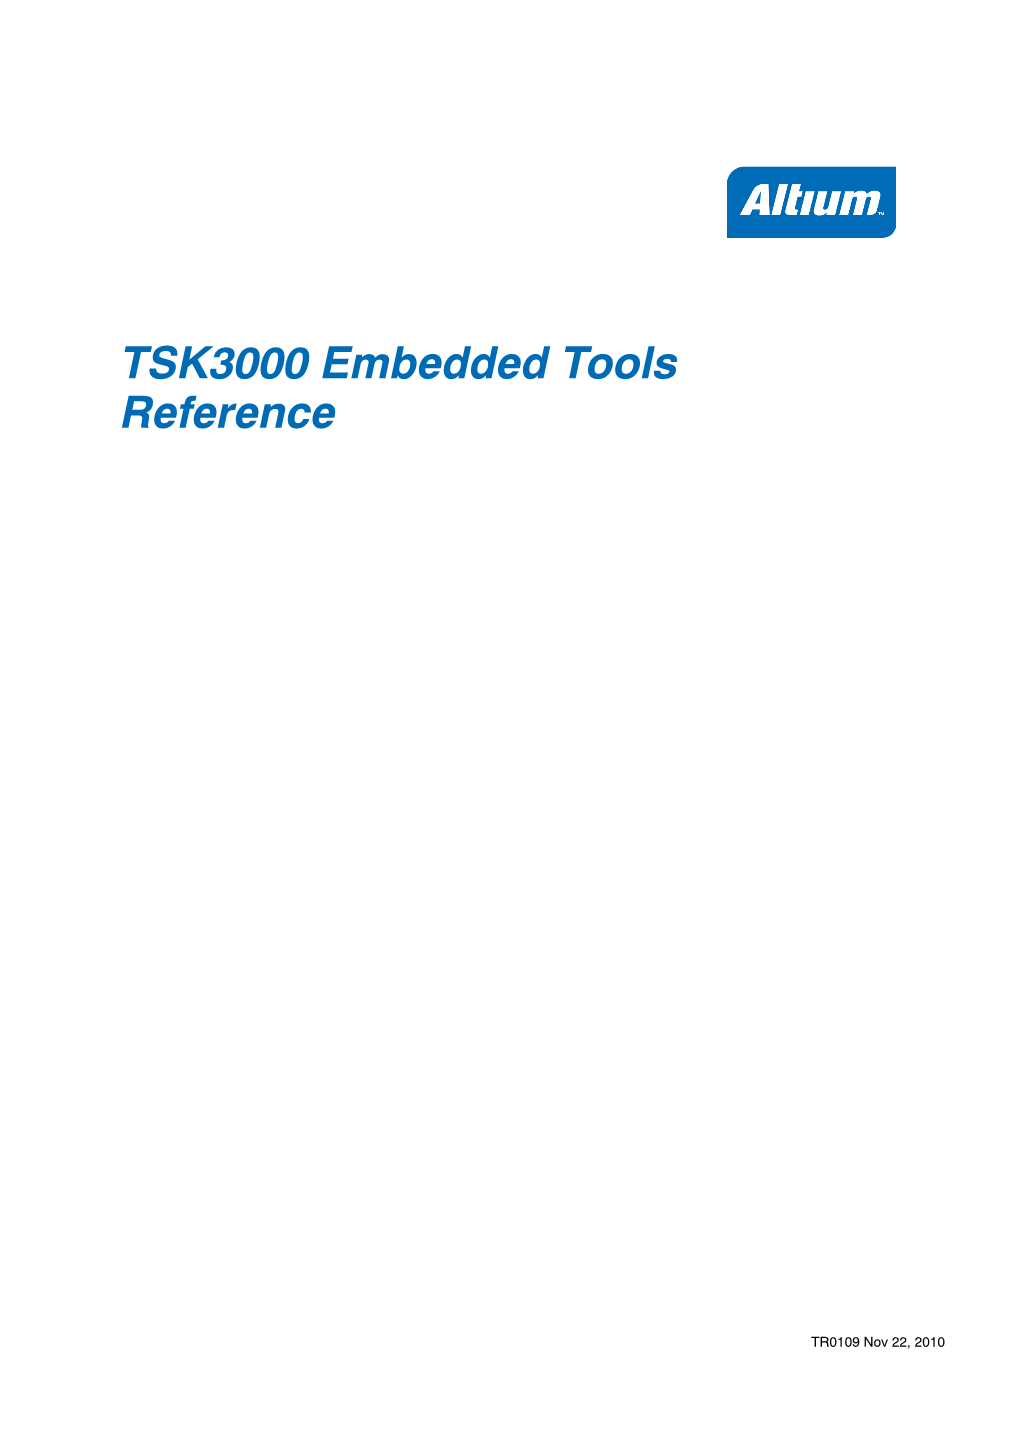 TR0109 TSK3000 Embedded Tools Reference